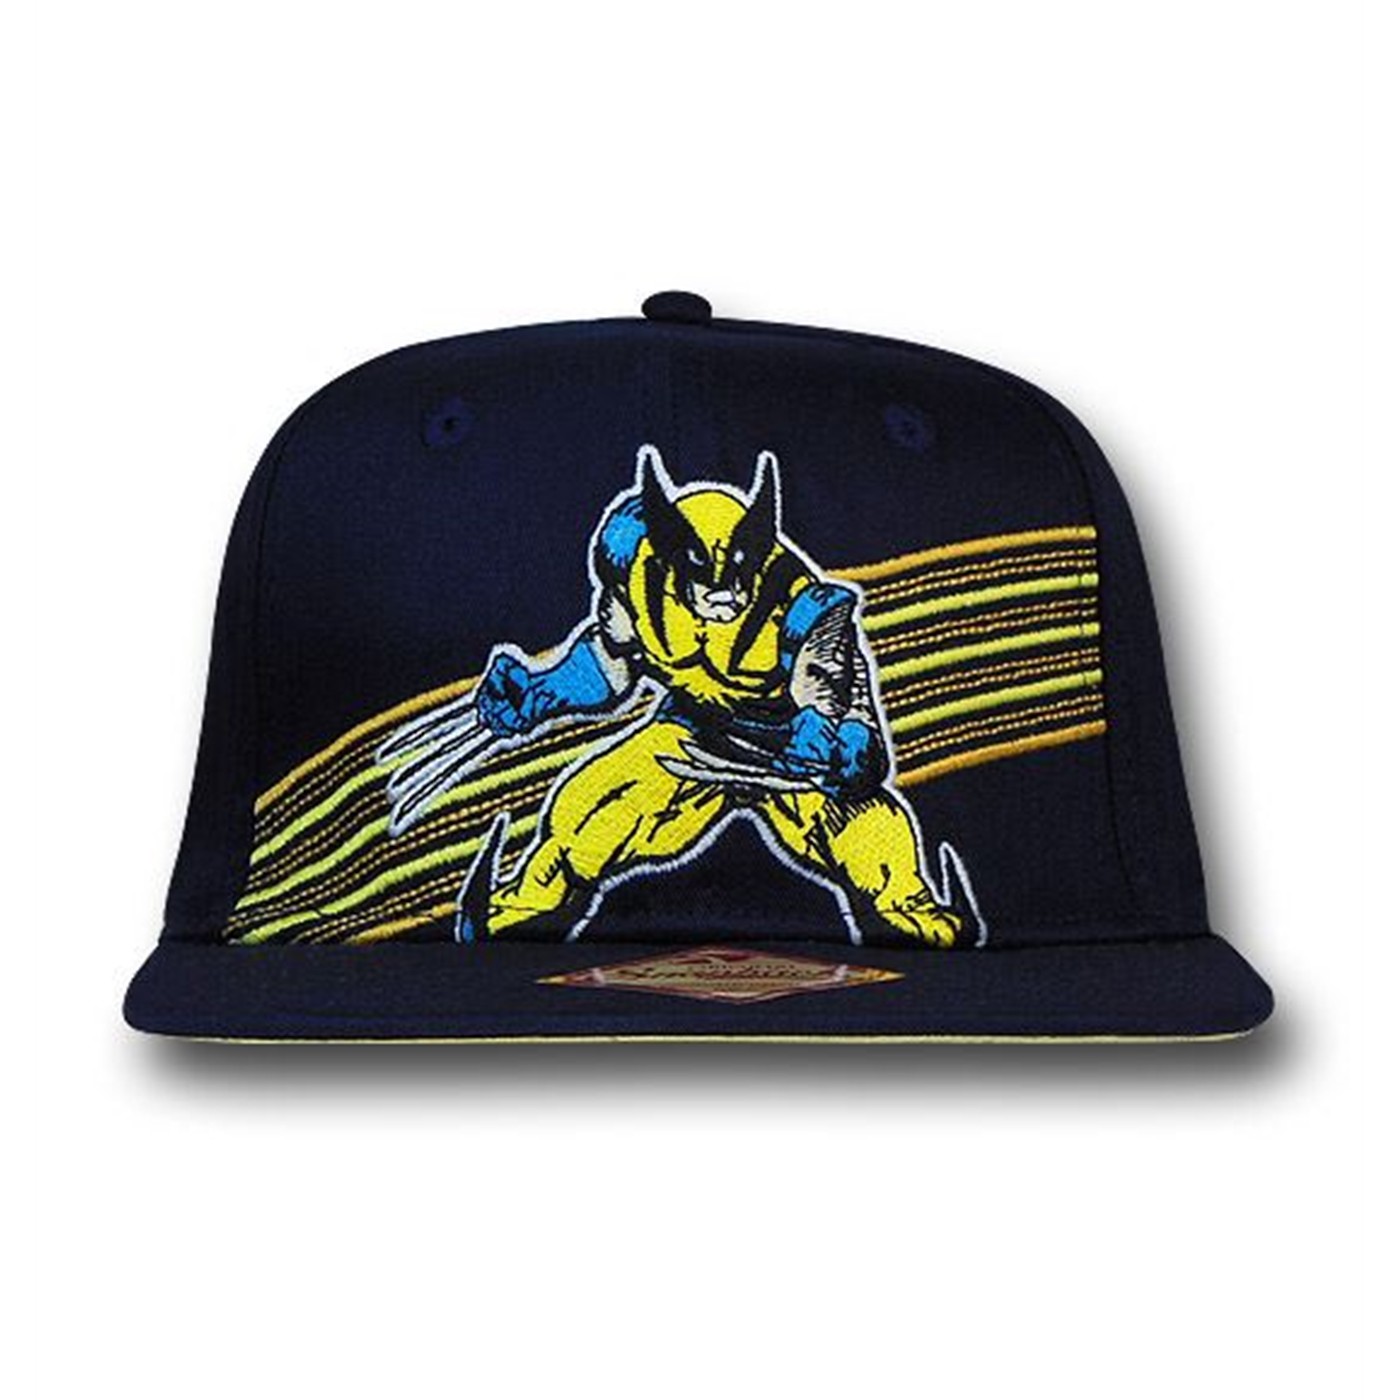 Wolverine Retro Image and Stripes Snapback Cap